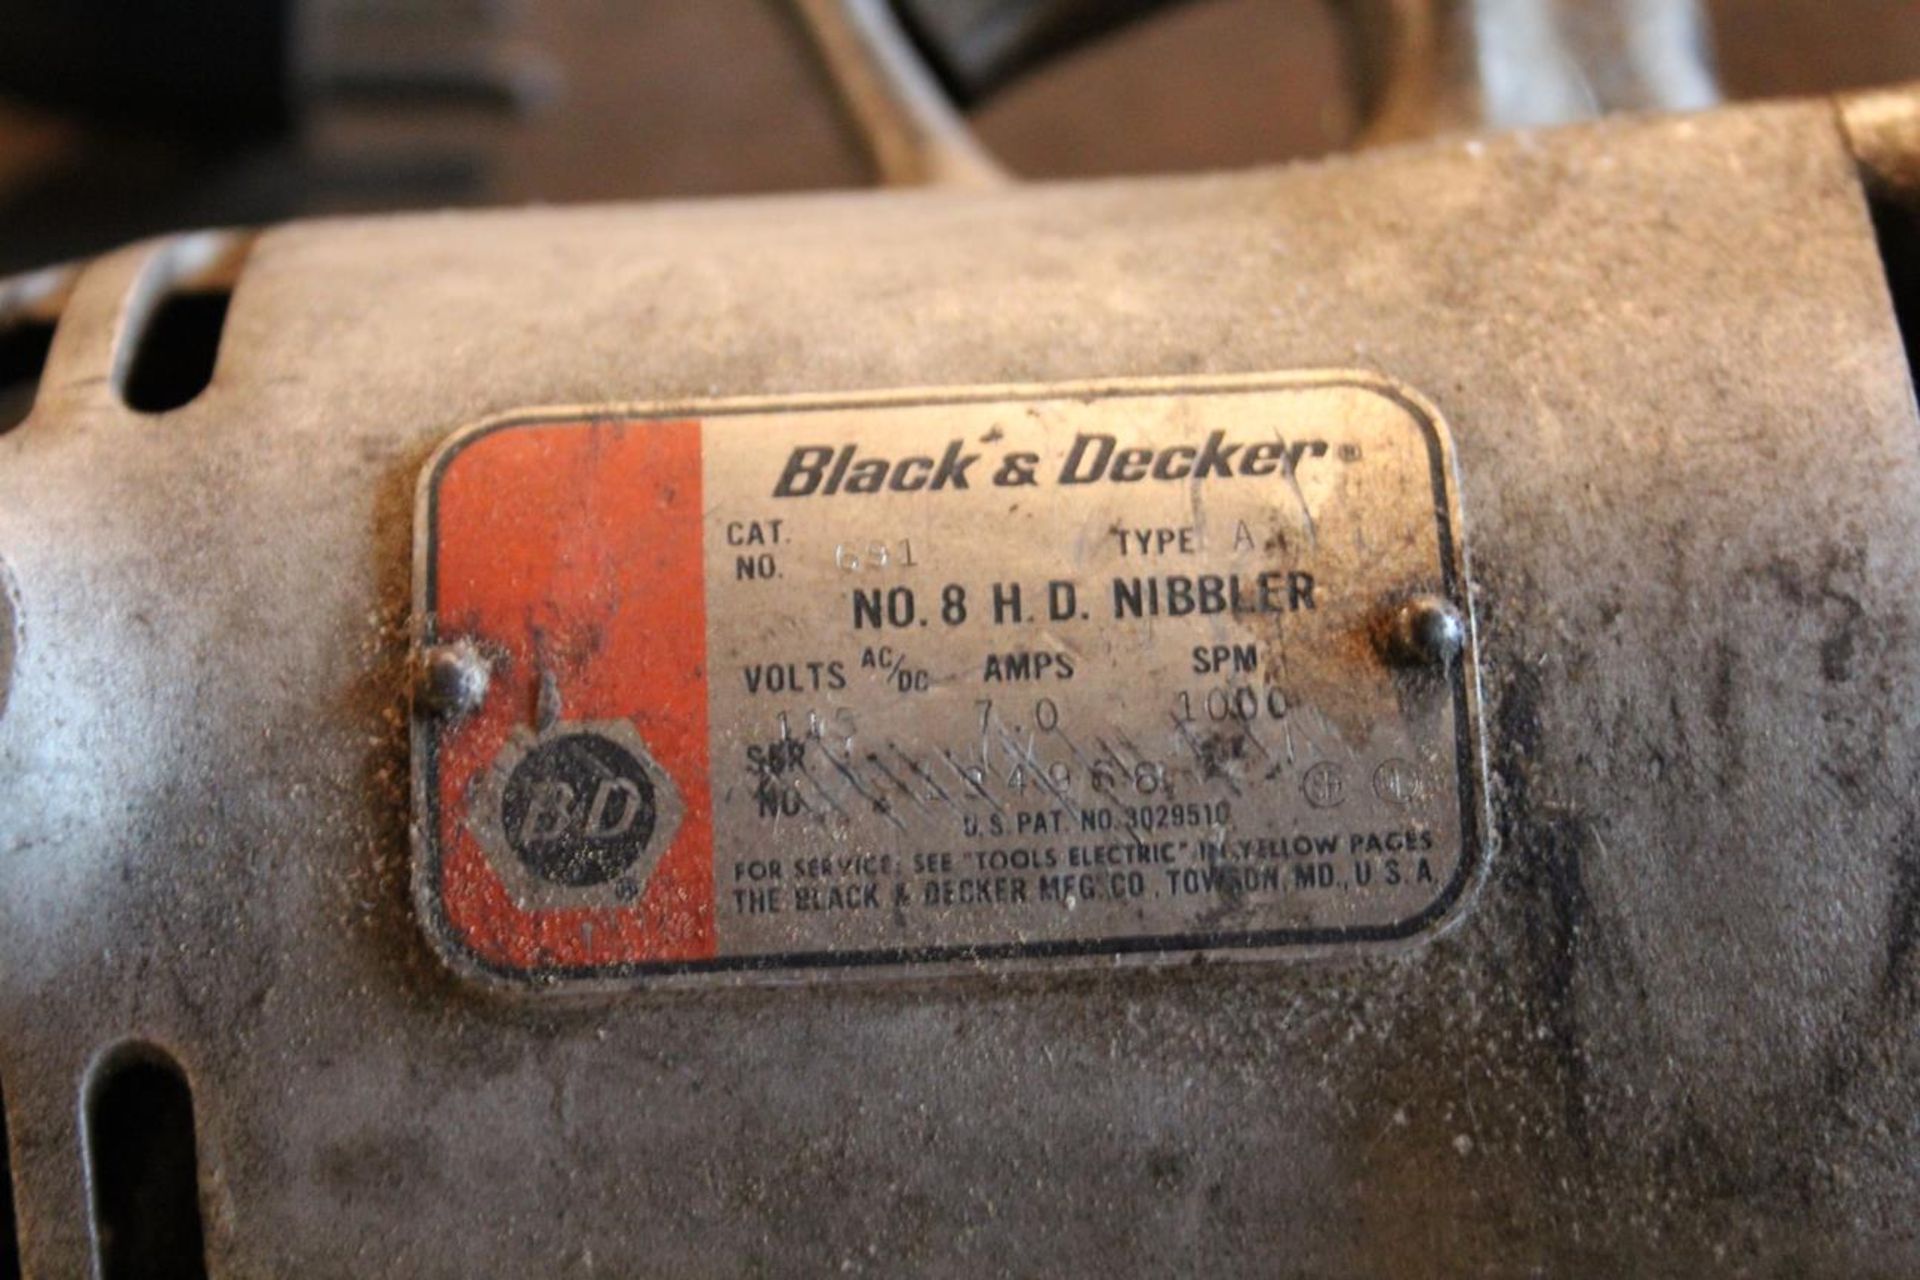 Black & Decker N0. 8 H.D. Nibbler 1000 SPM - Image 3 of 3